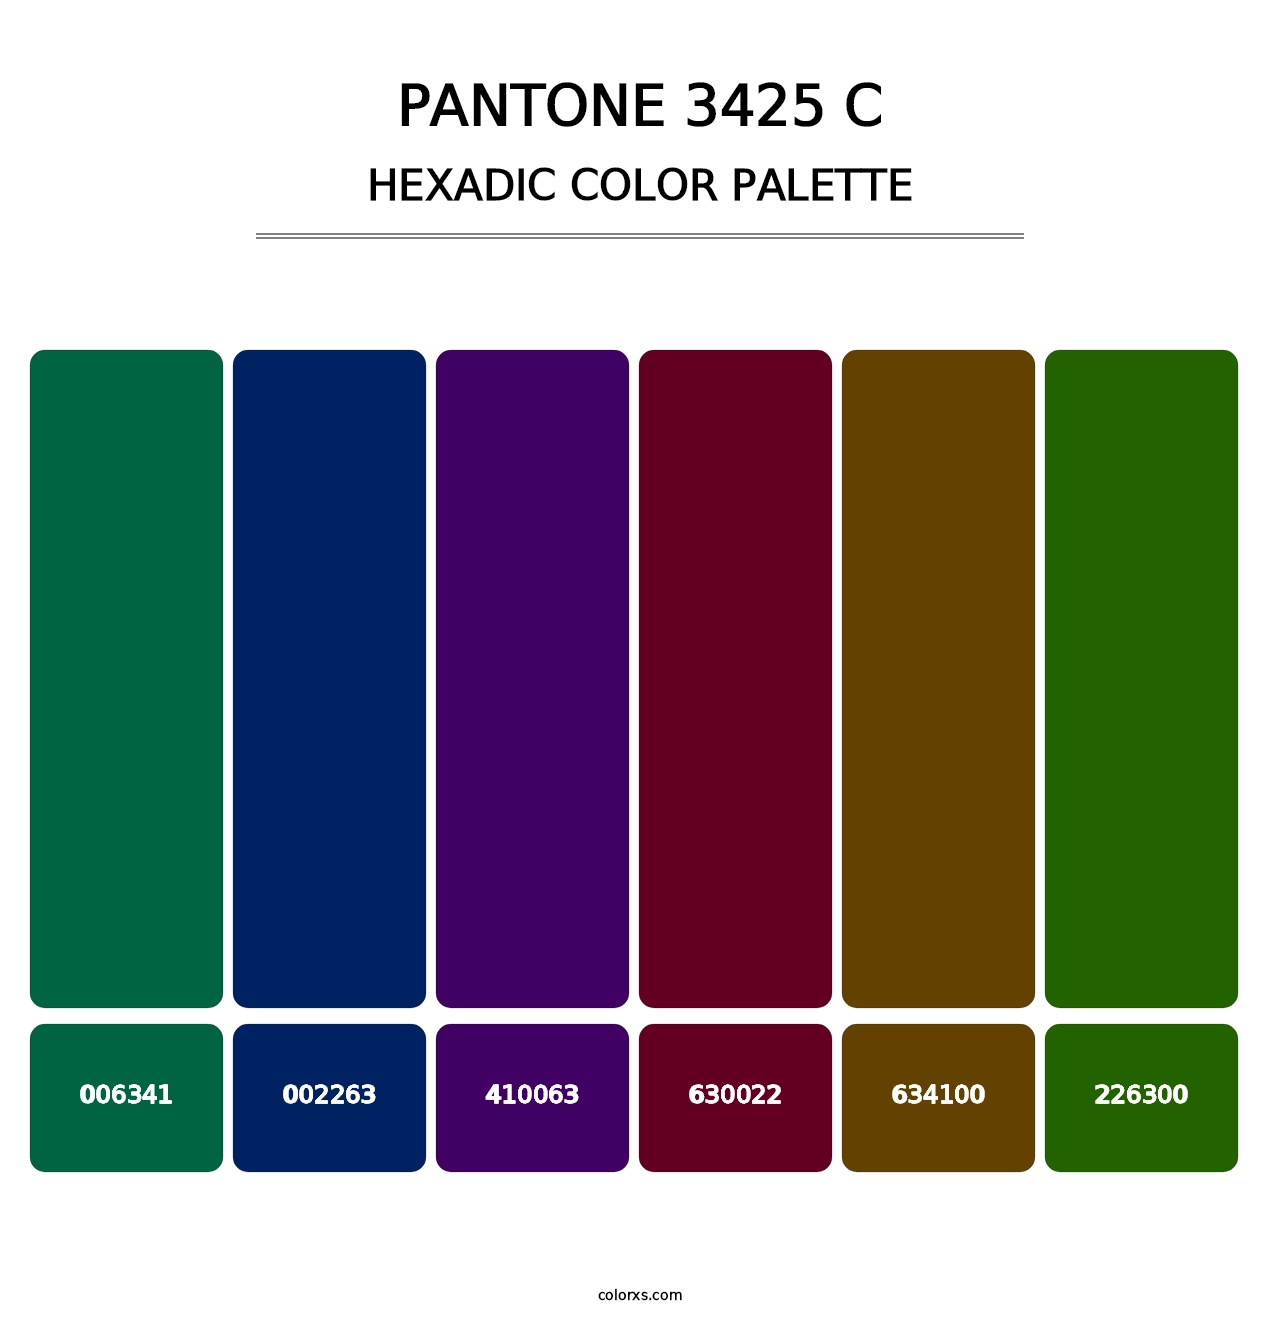 PANTONE 3425 C - Hexadic Color Palette